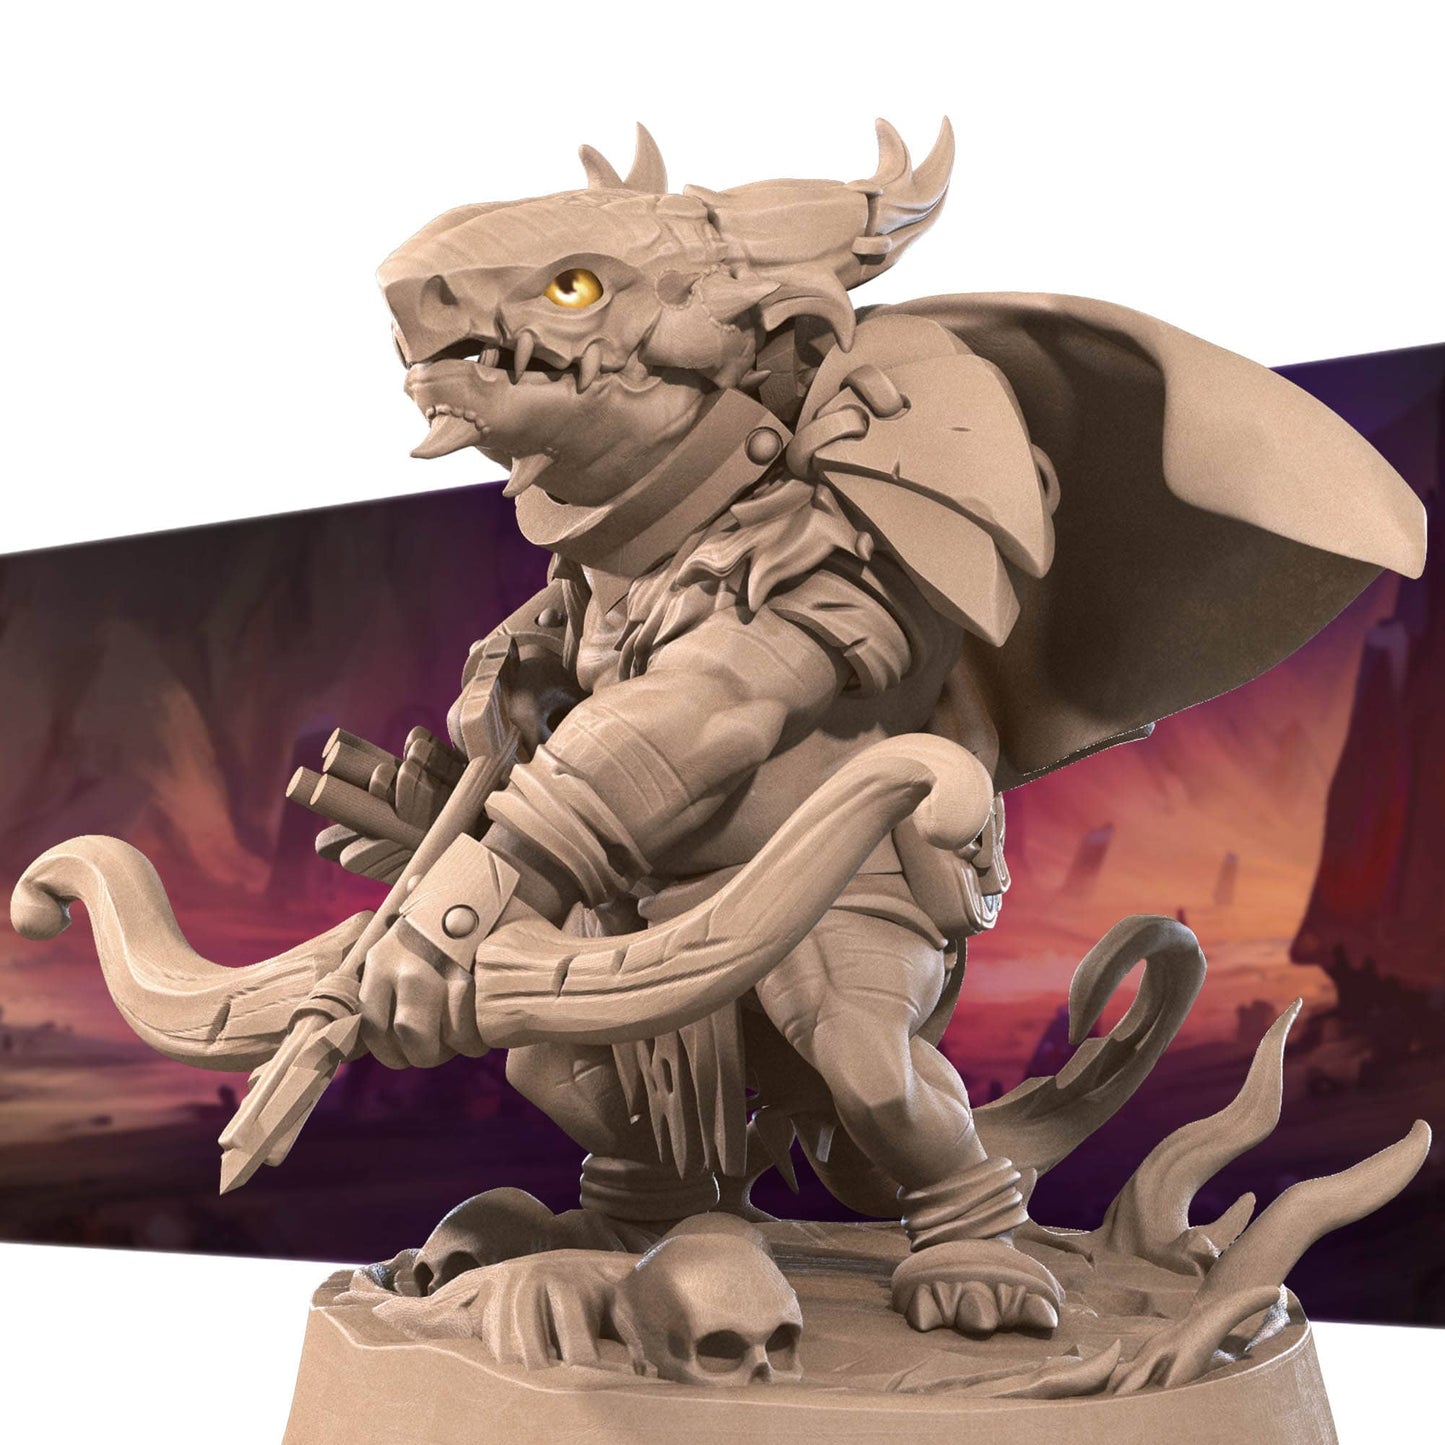 Kobold Ranger Lizardfolk | D&D Miniature TTRPG Character | Bite the Bullet - Tattles Told 3D